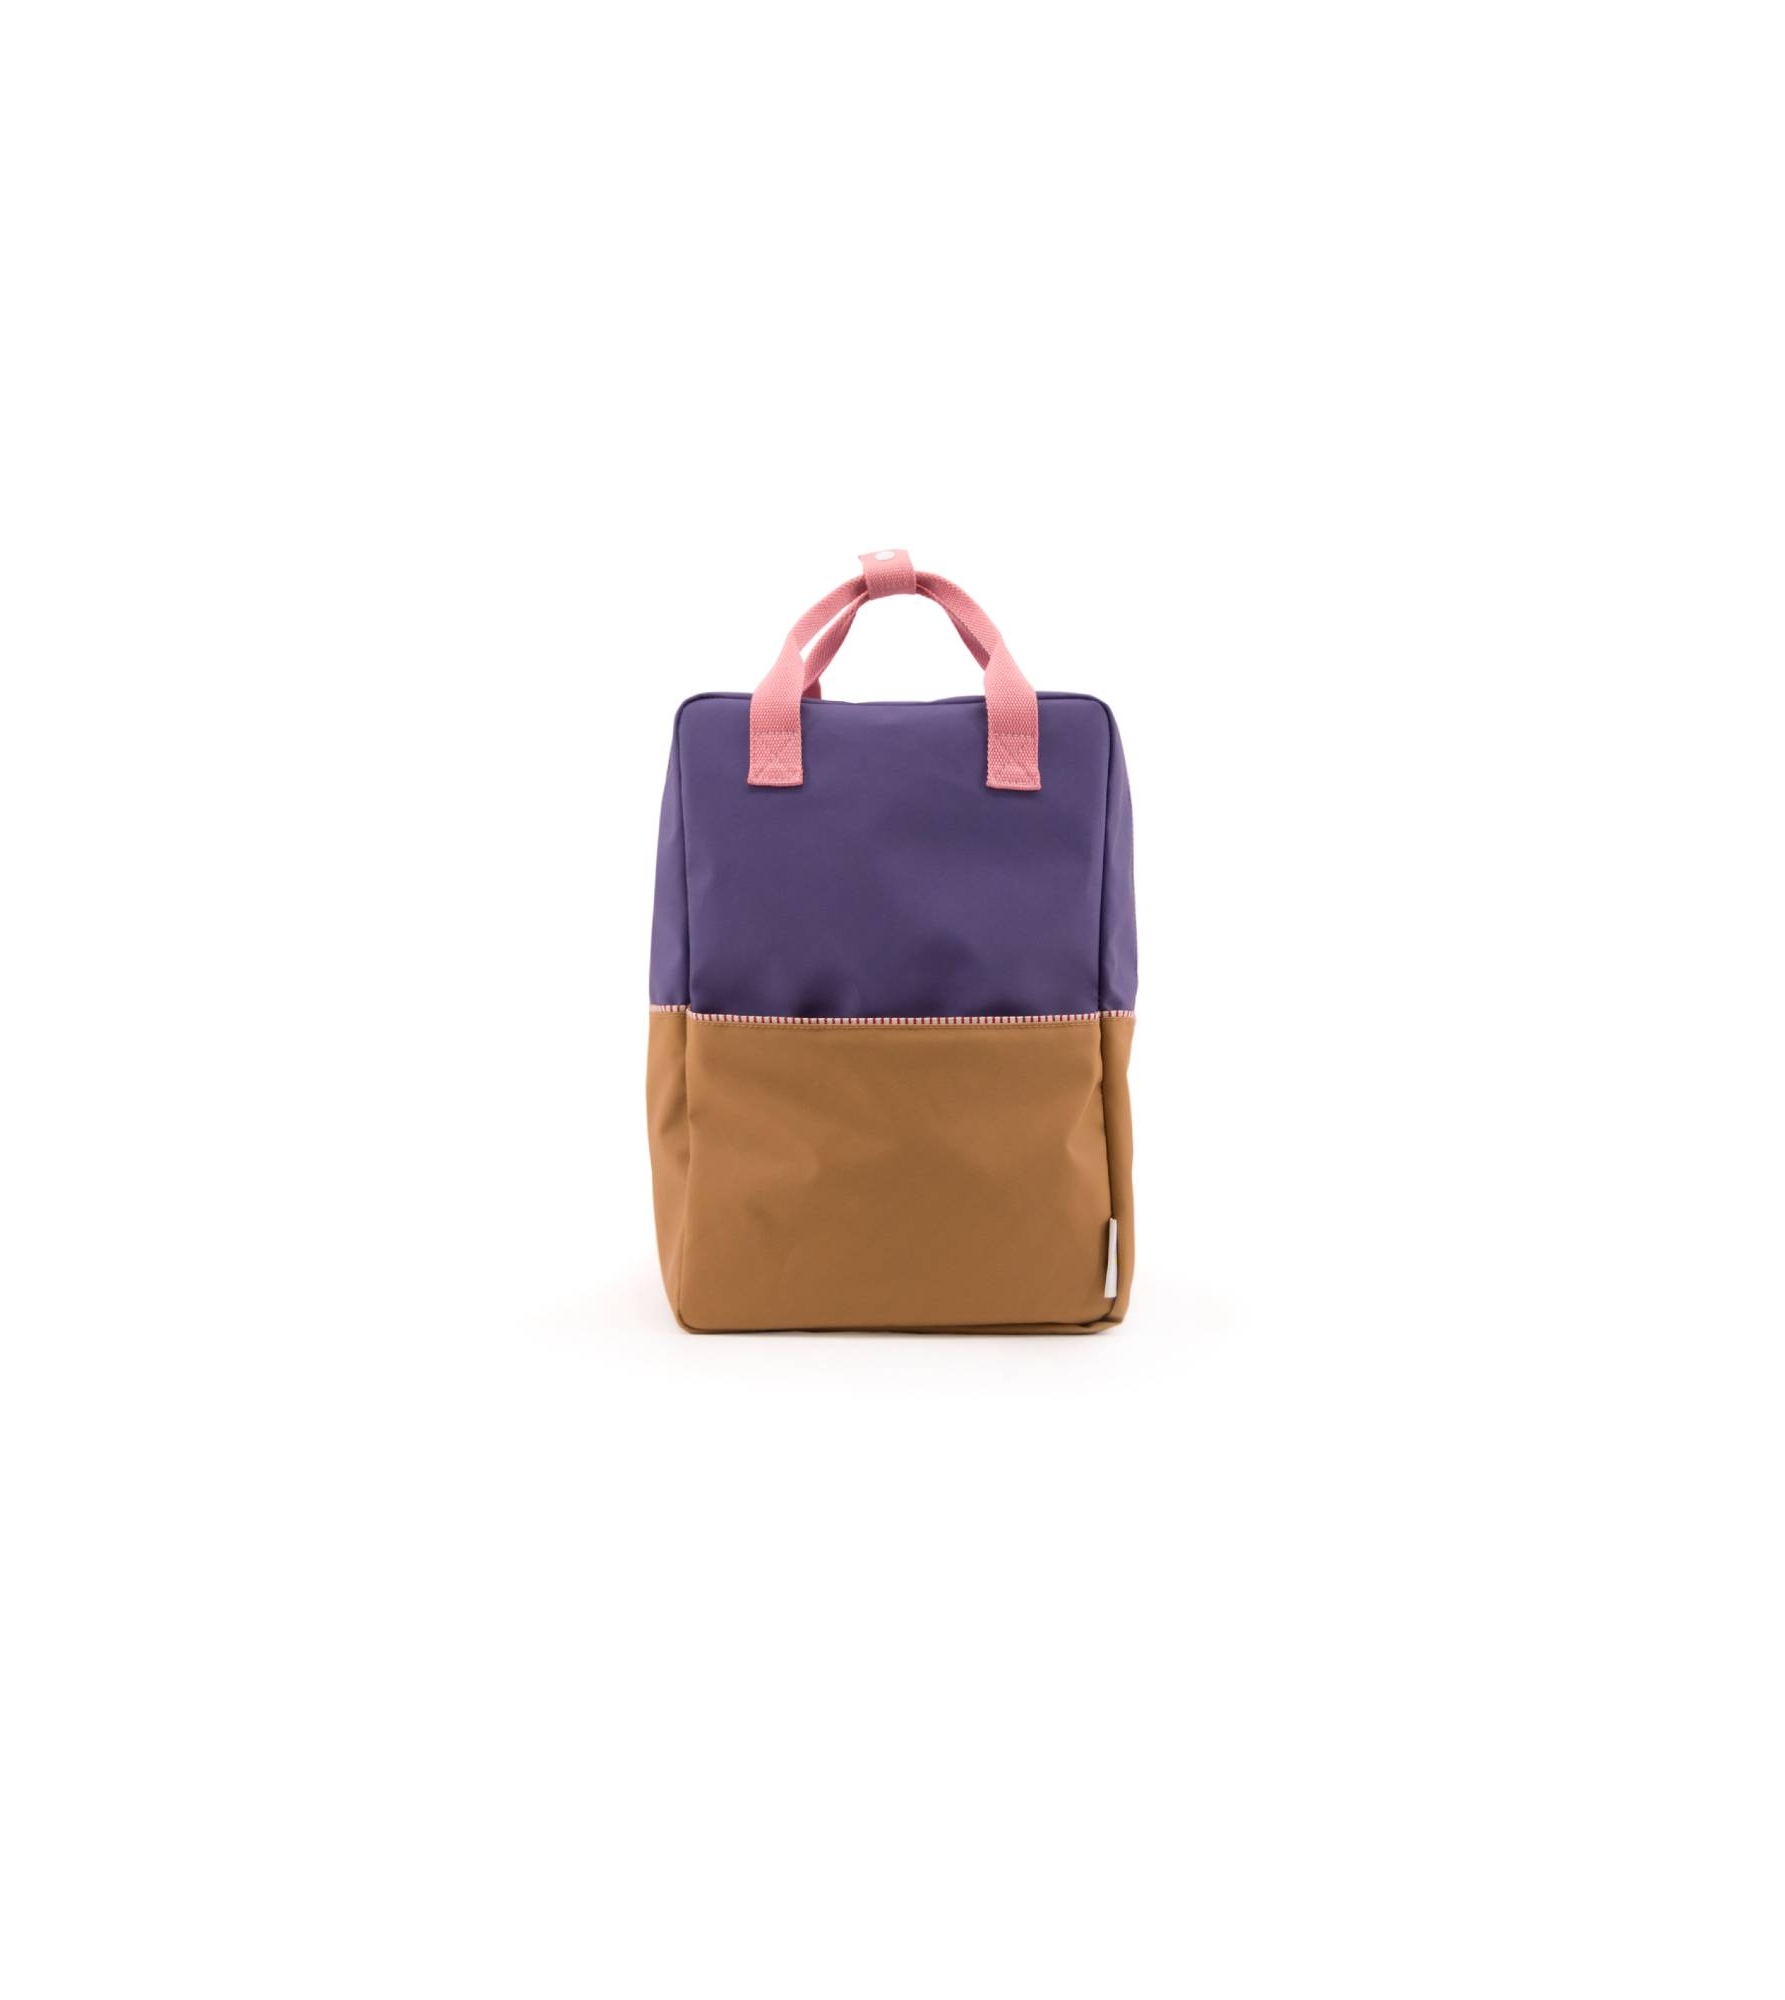 1801397 - Sticky Lemon - style - Backpack large - lobby purple _ panache gold _ puff pink.jpg